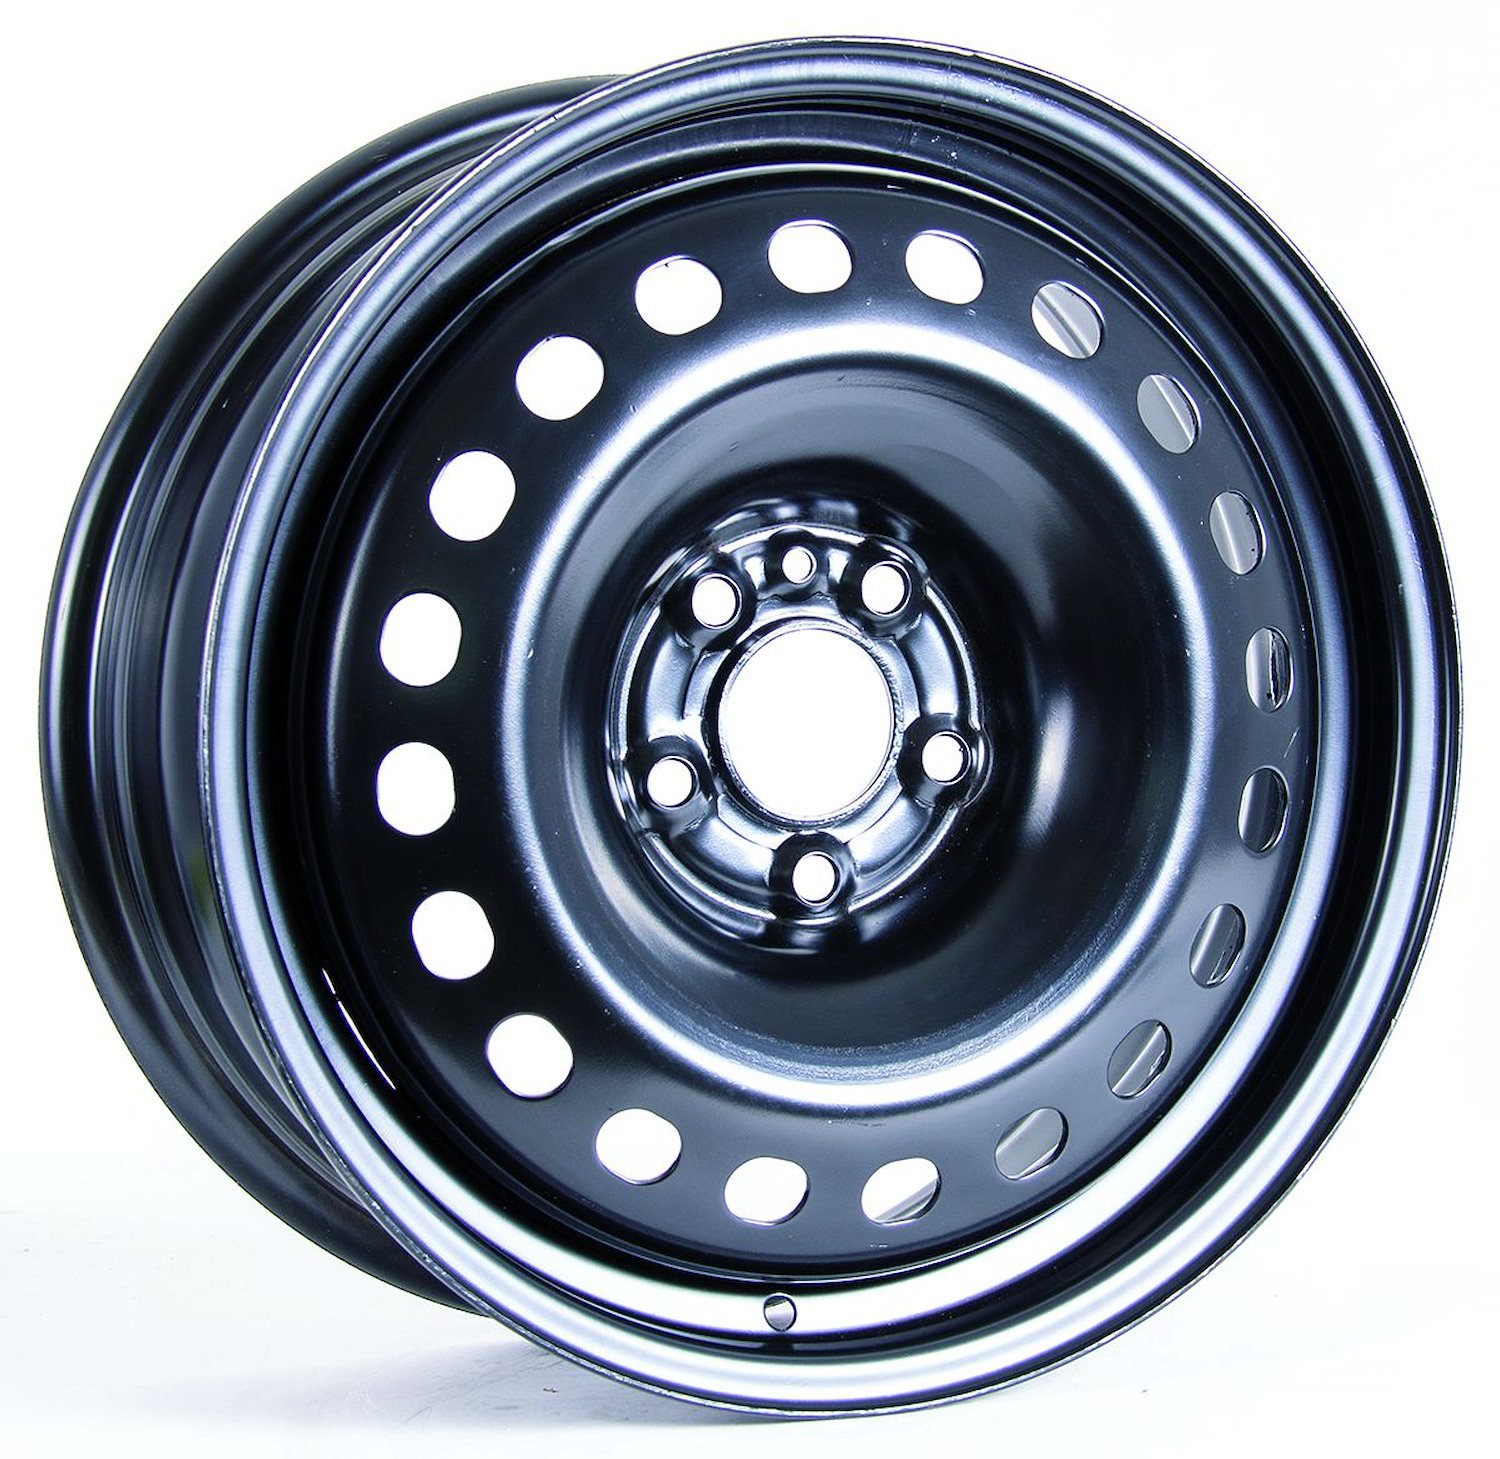 X47510 Steel Wheel [Size: 17" x 7"] Black Finish